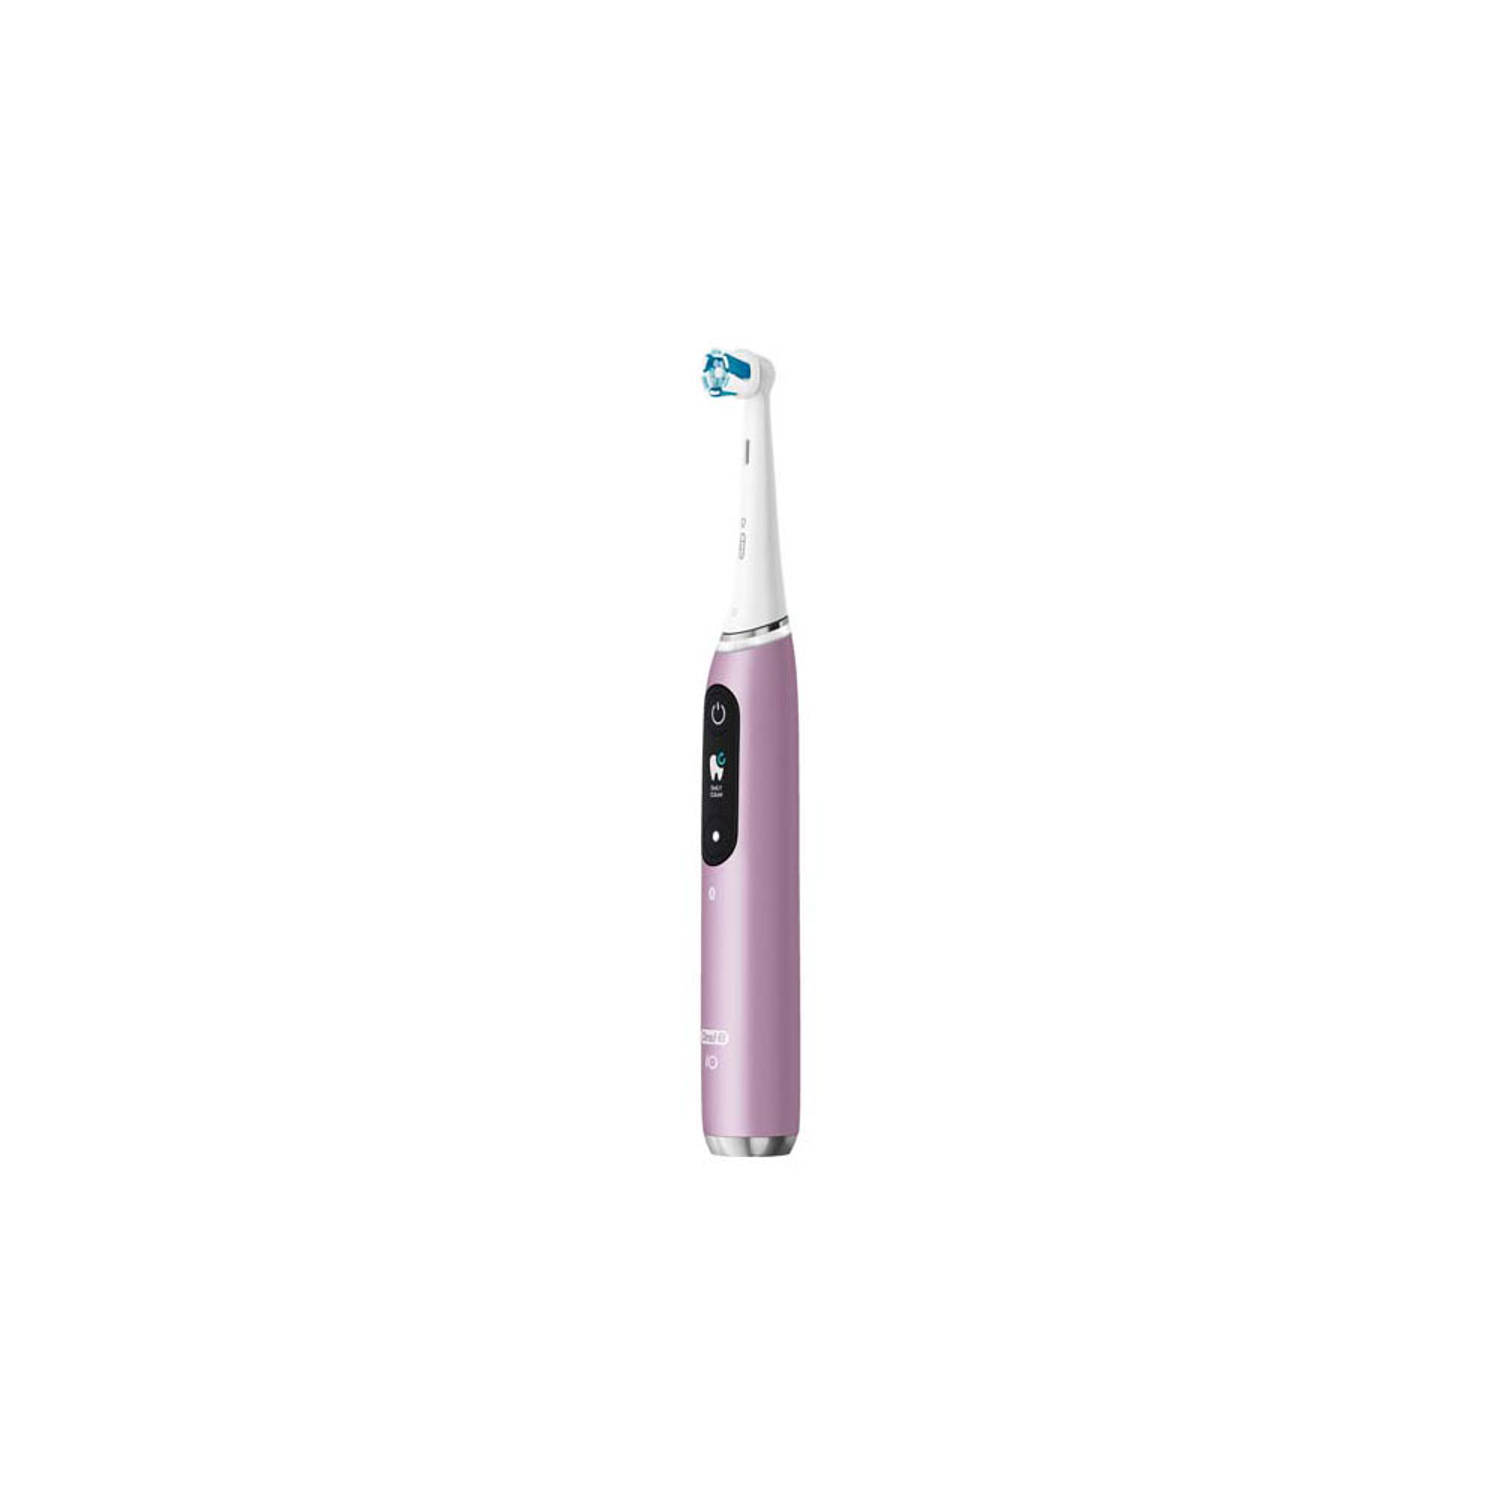 Oral B Oral-b Io 9n - Elektrische Tandenborstel - Roze